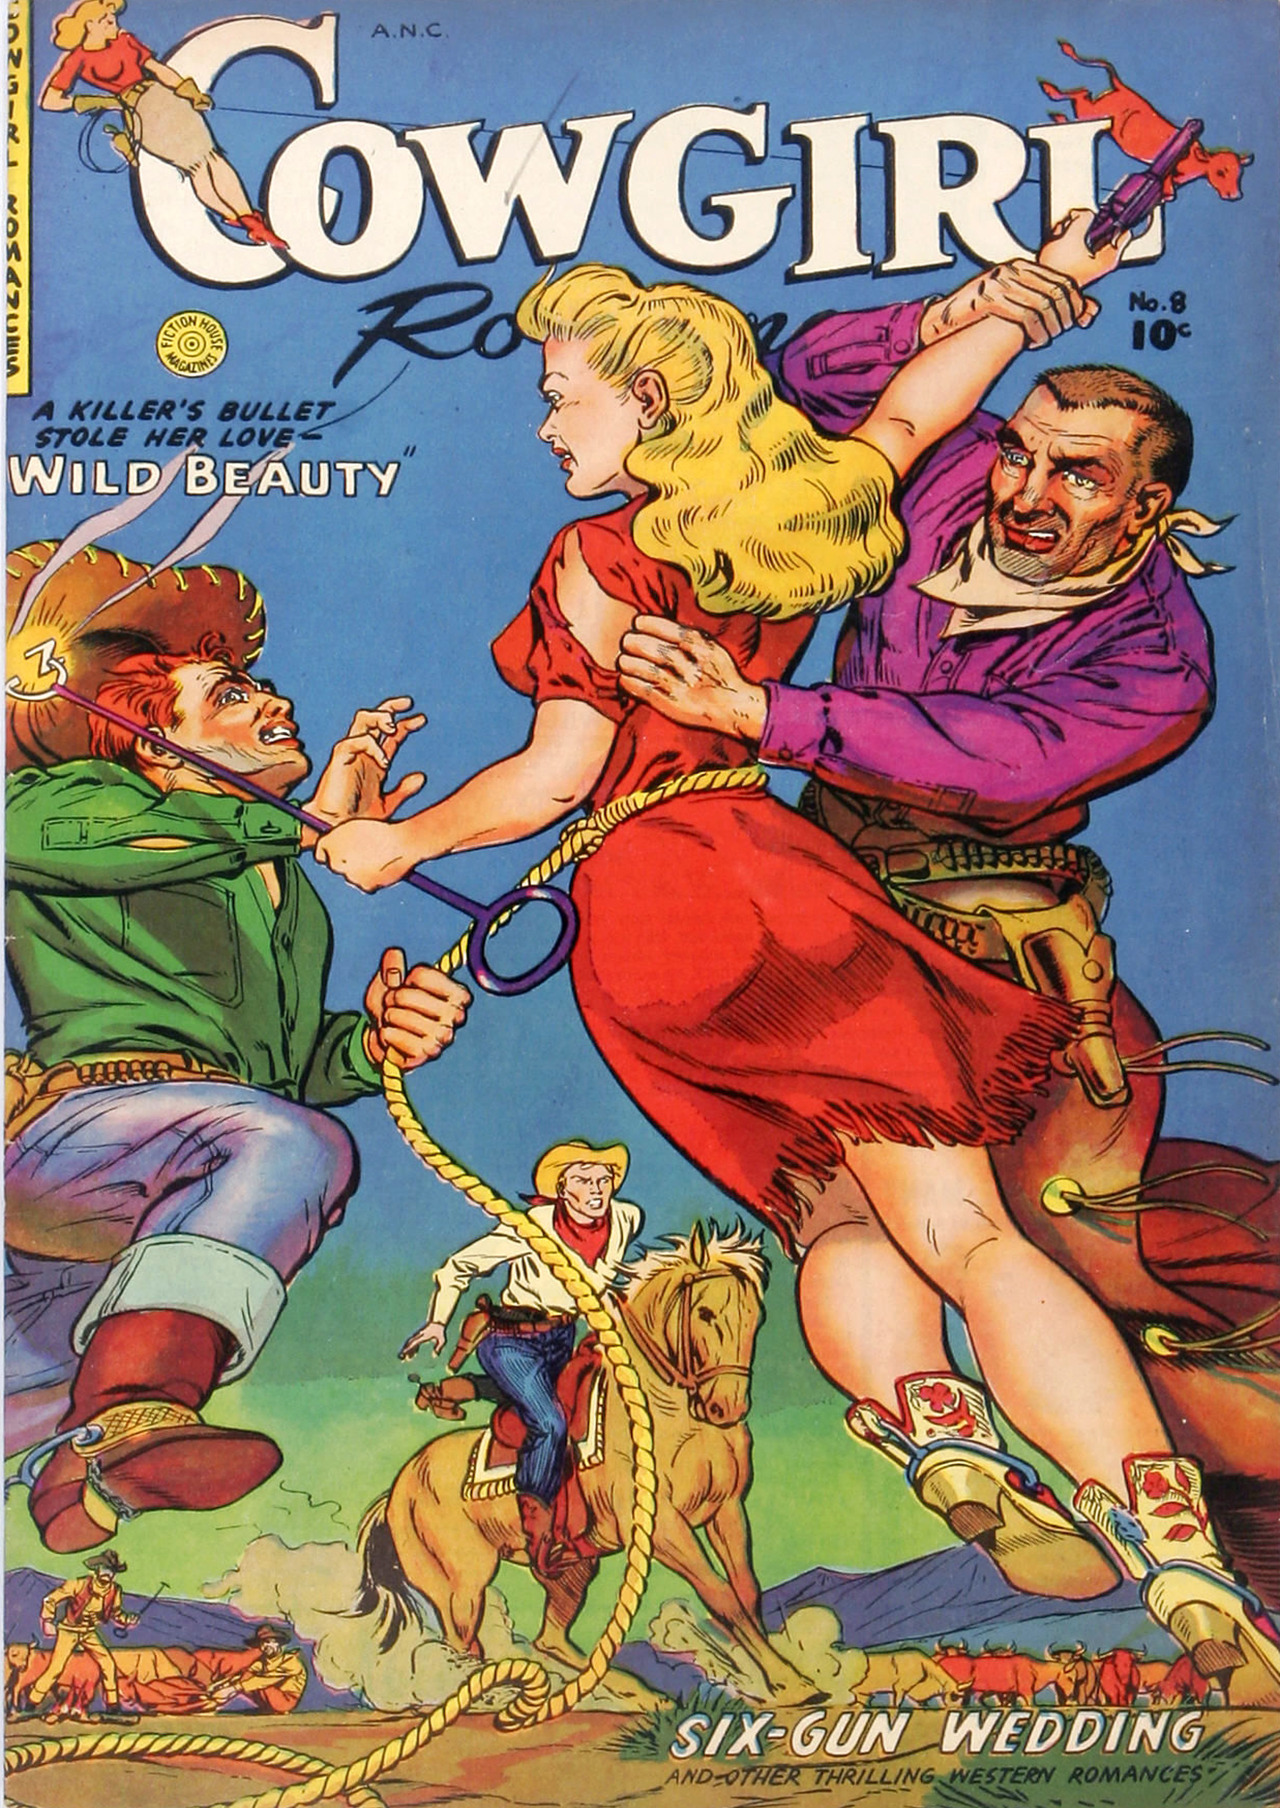 Cowgirl Romances
shovel-city:
brudesworld: Fiction House, 1950
